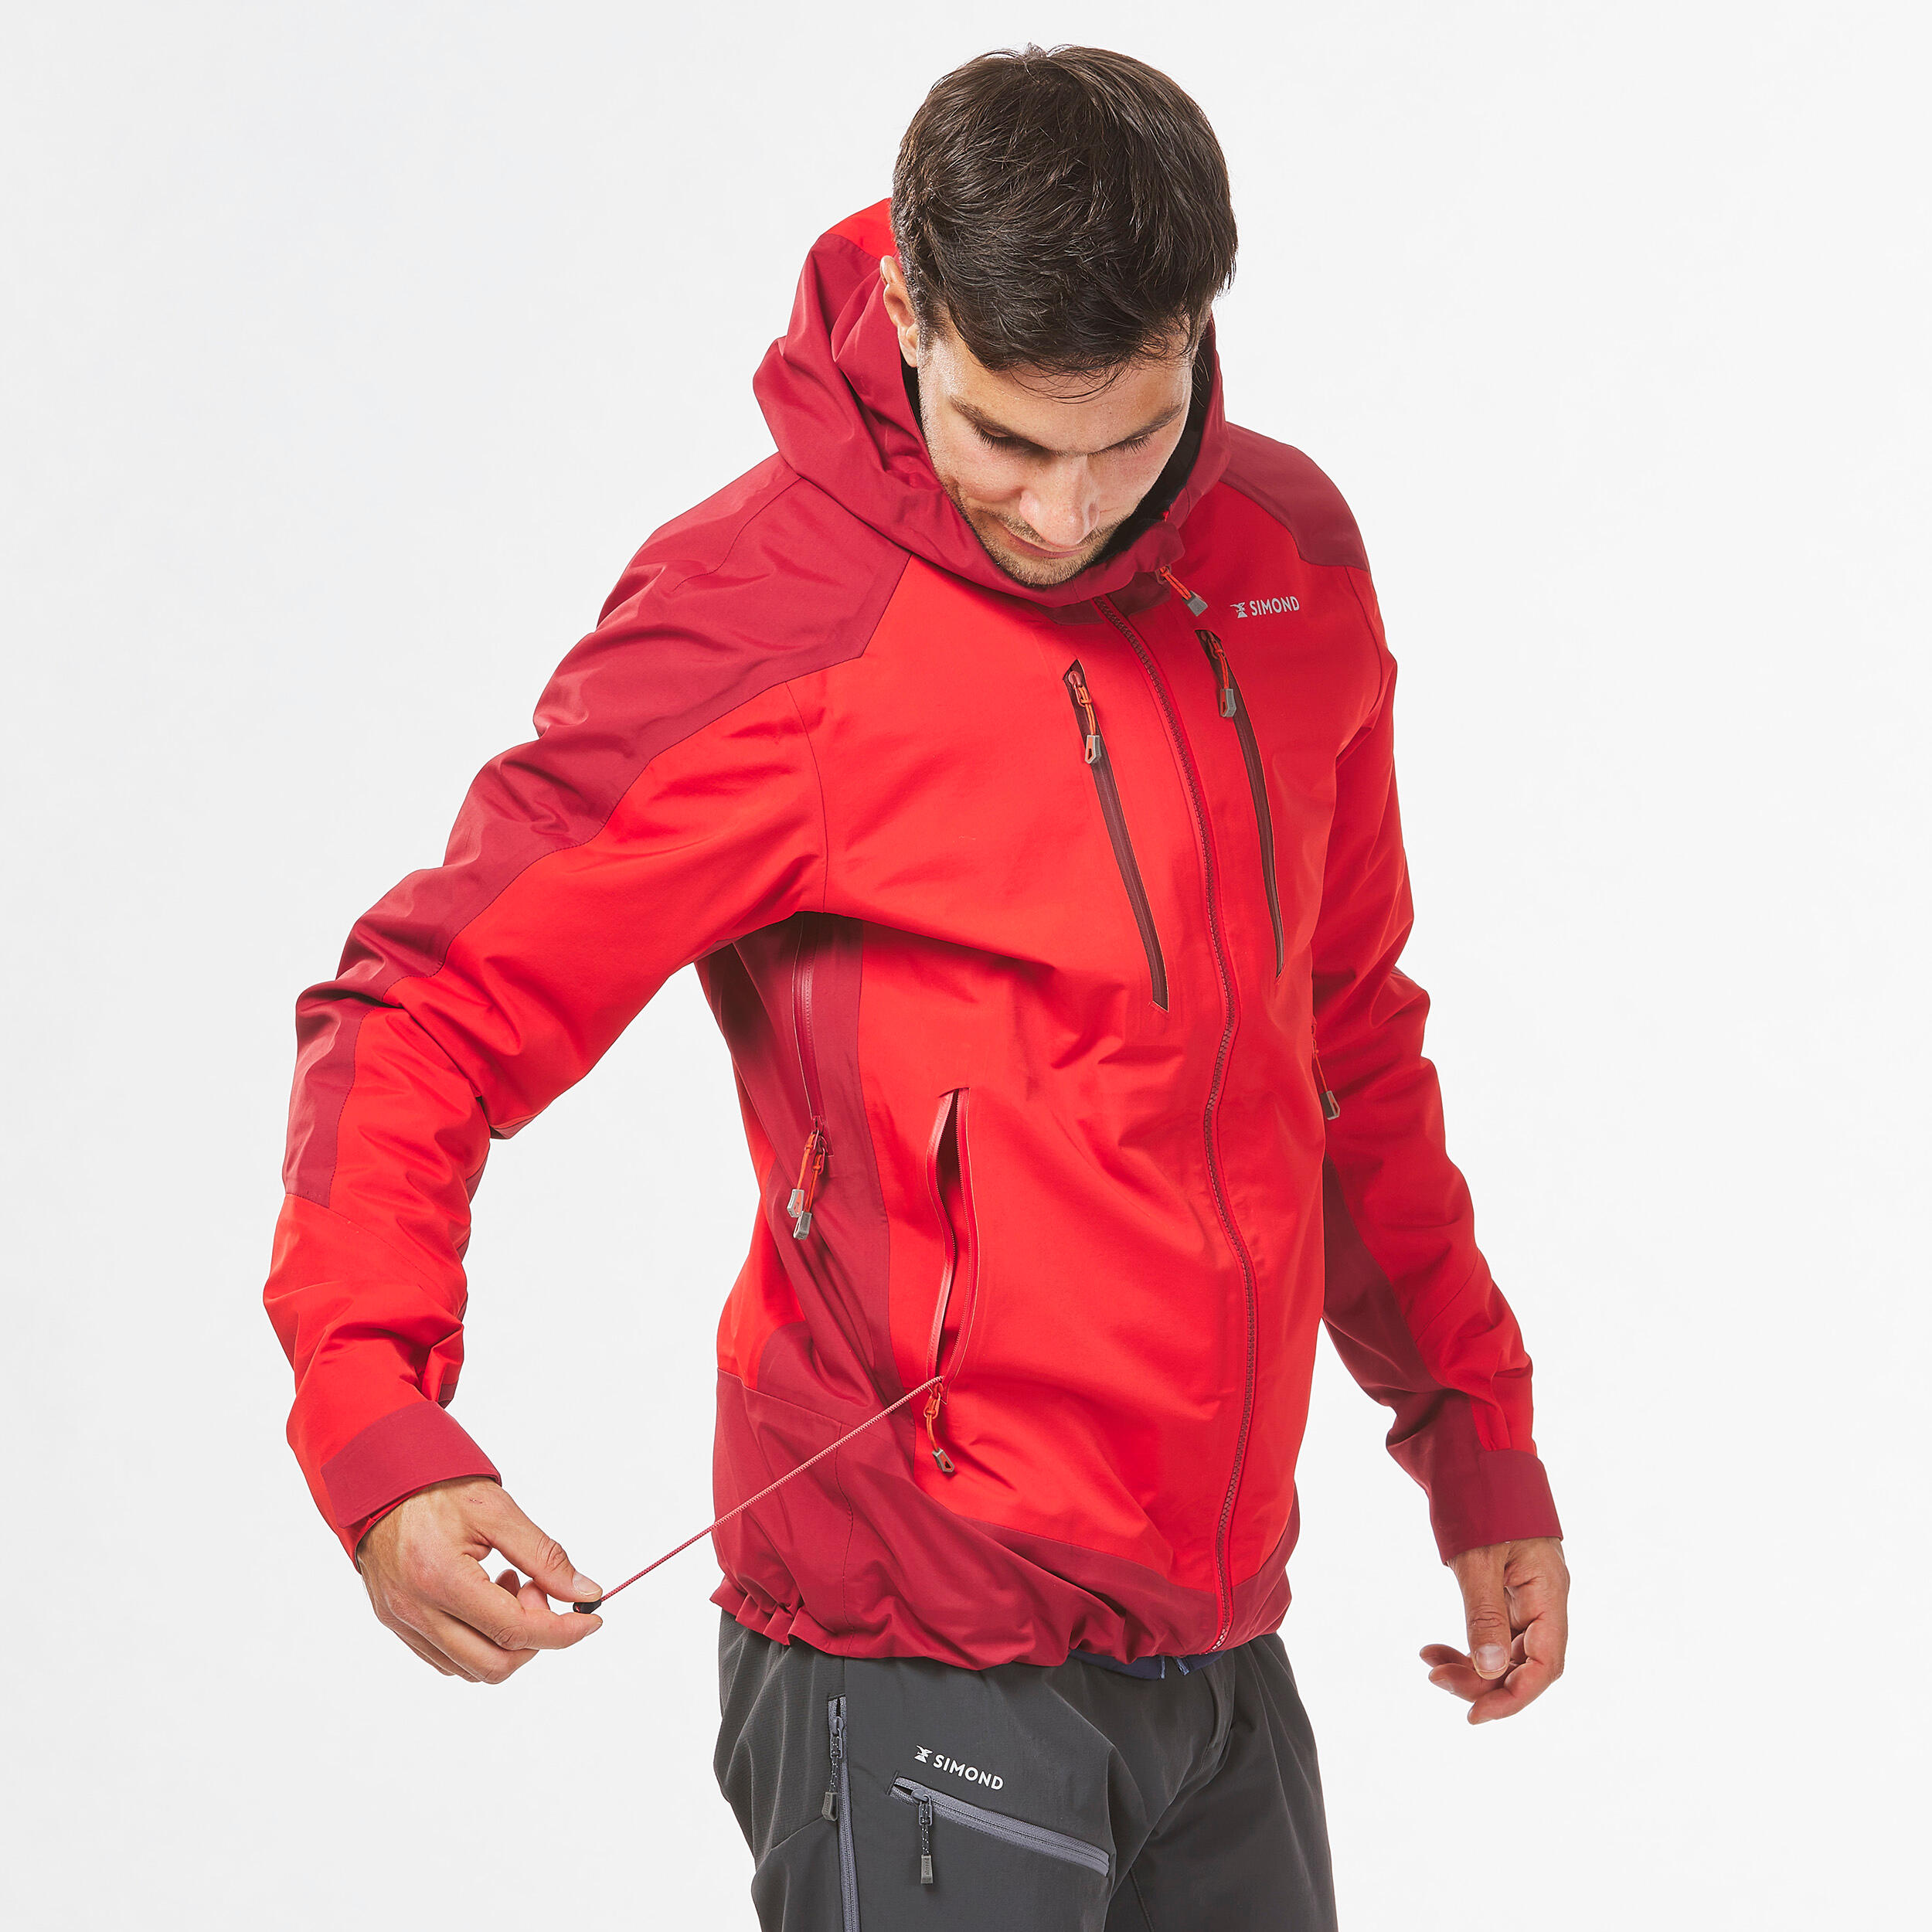 Men’s waterproof durable mountaineering jacket, red 11/17